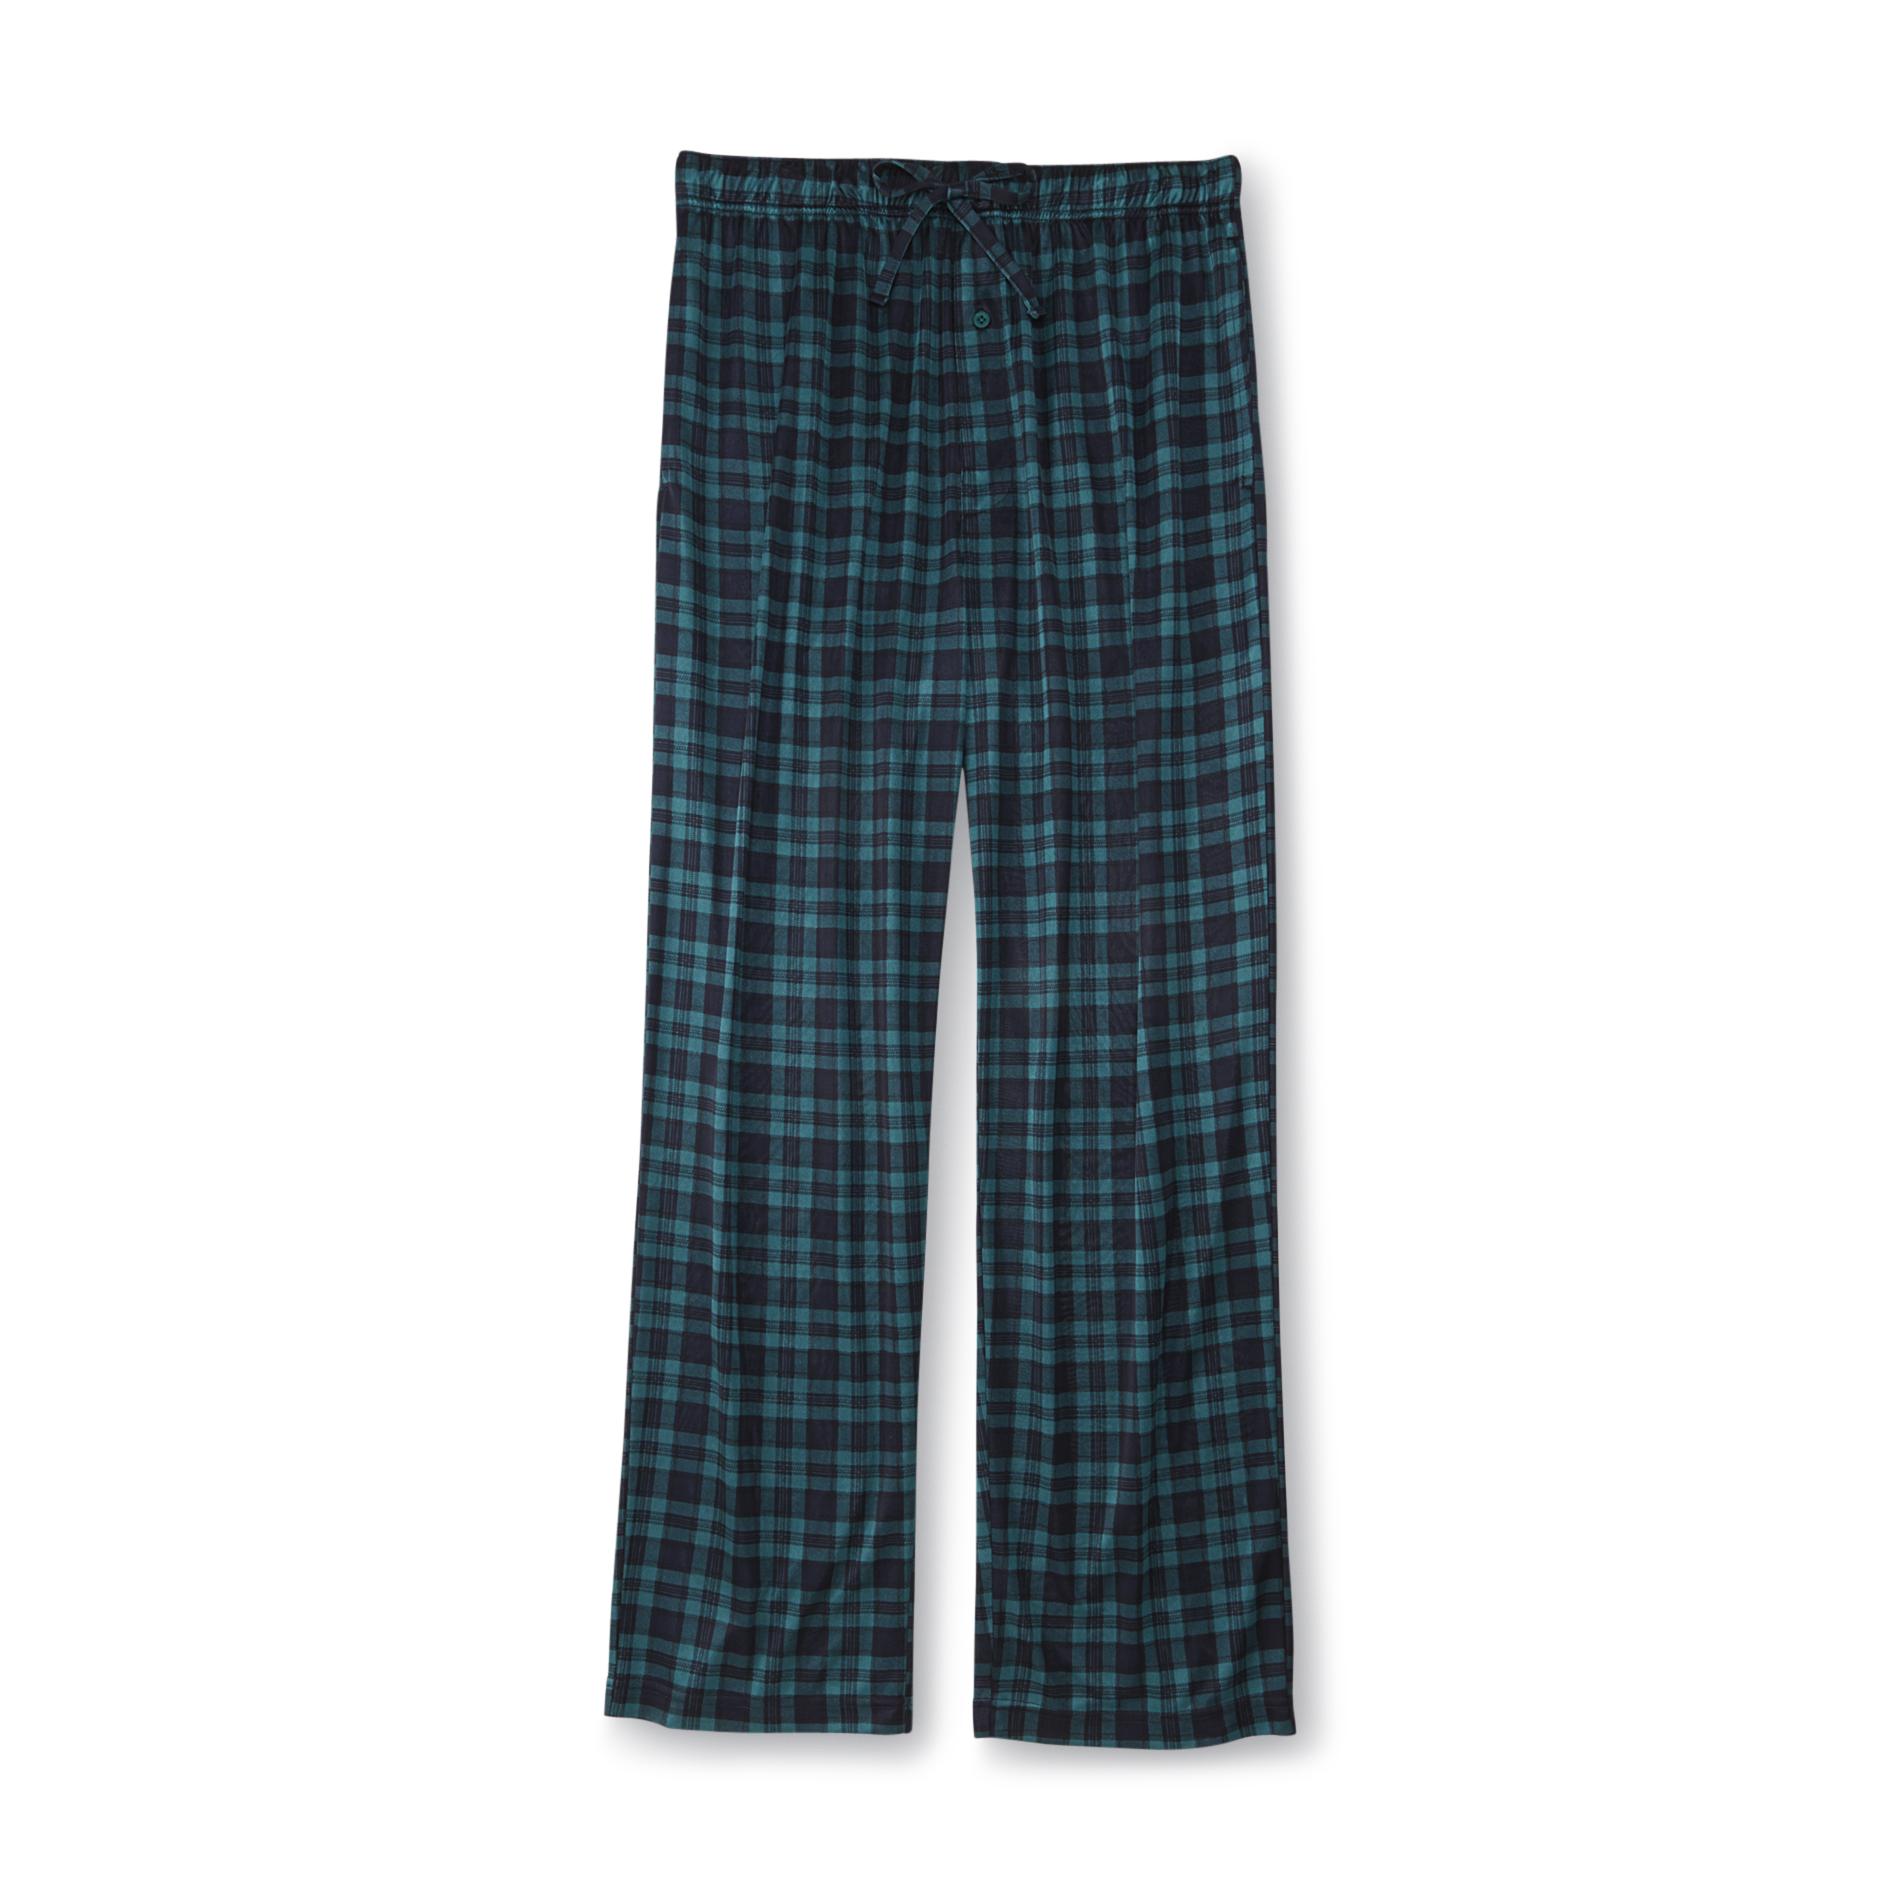 Joe Boxer Men's Pajama Pants - Checkered